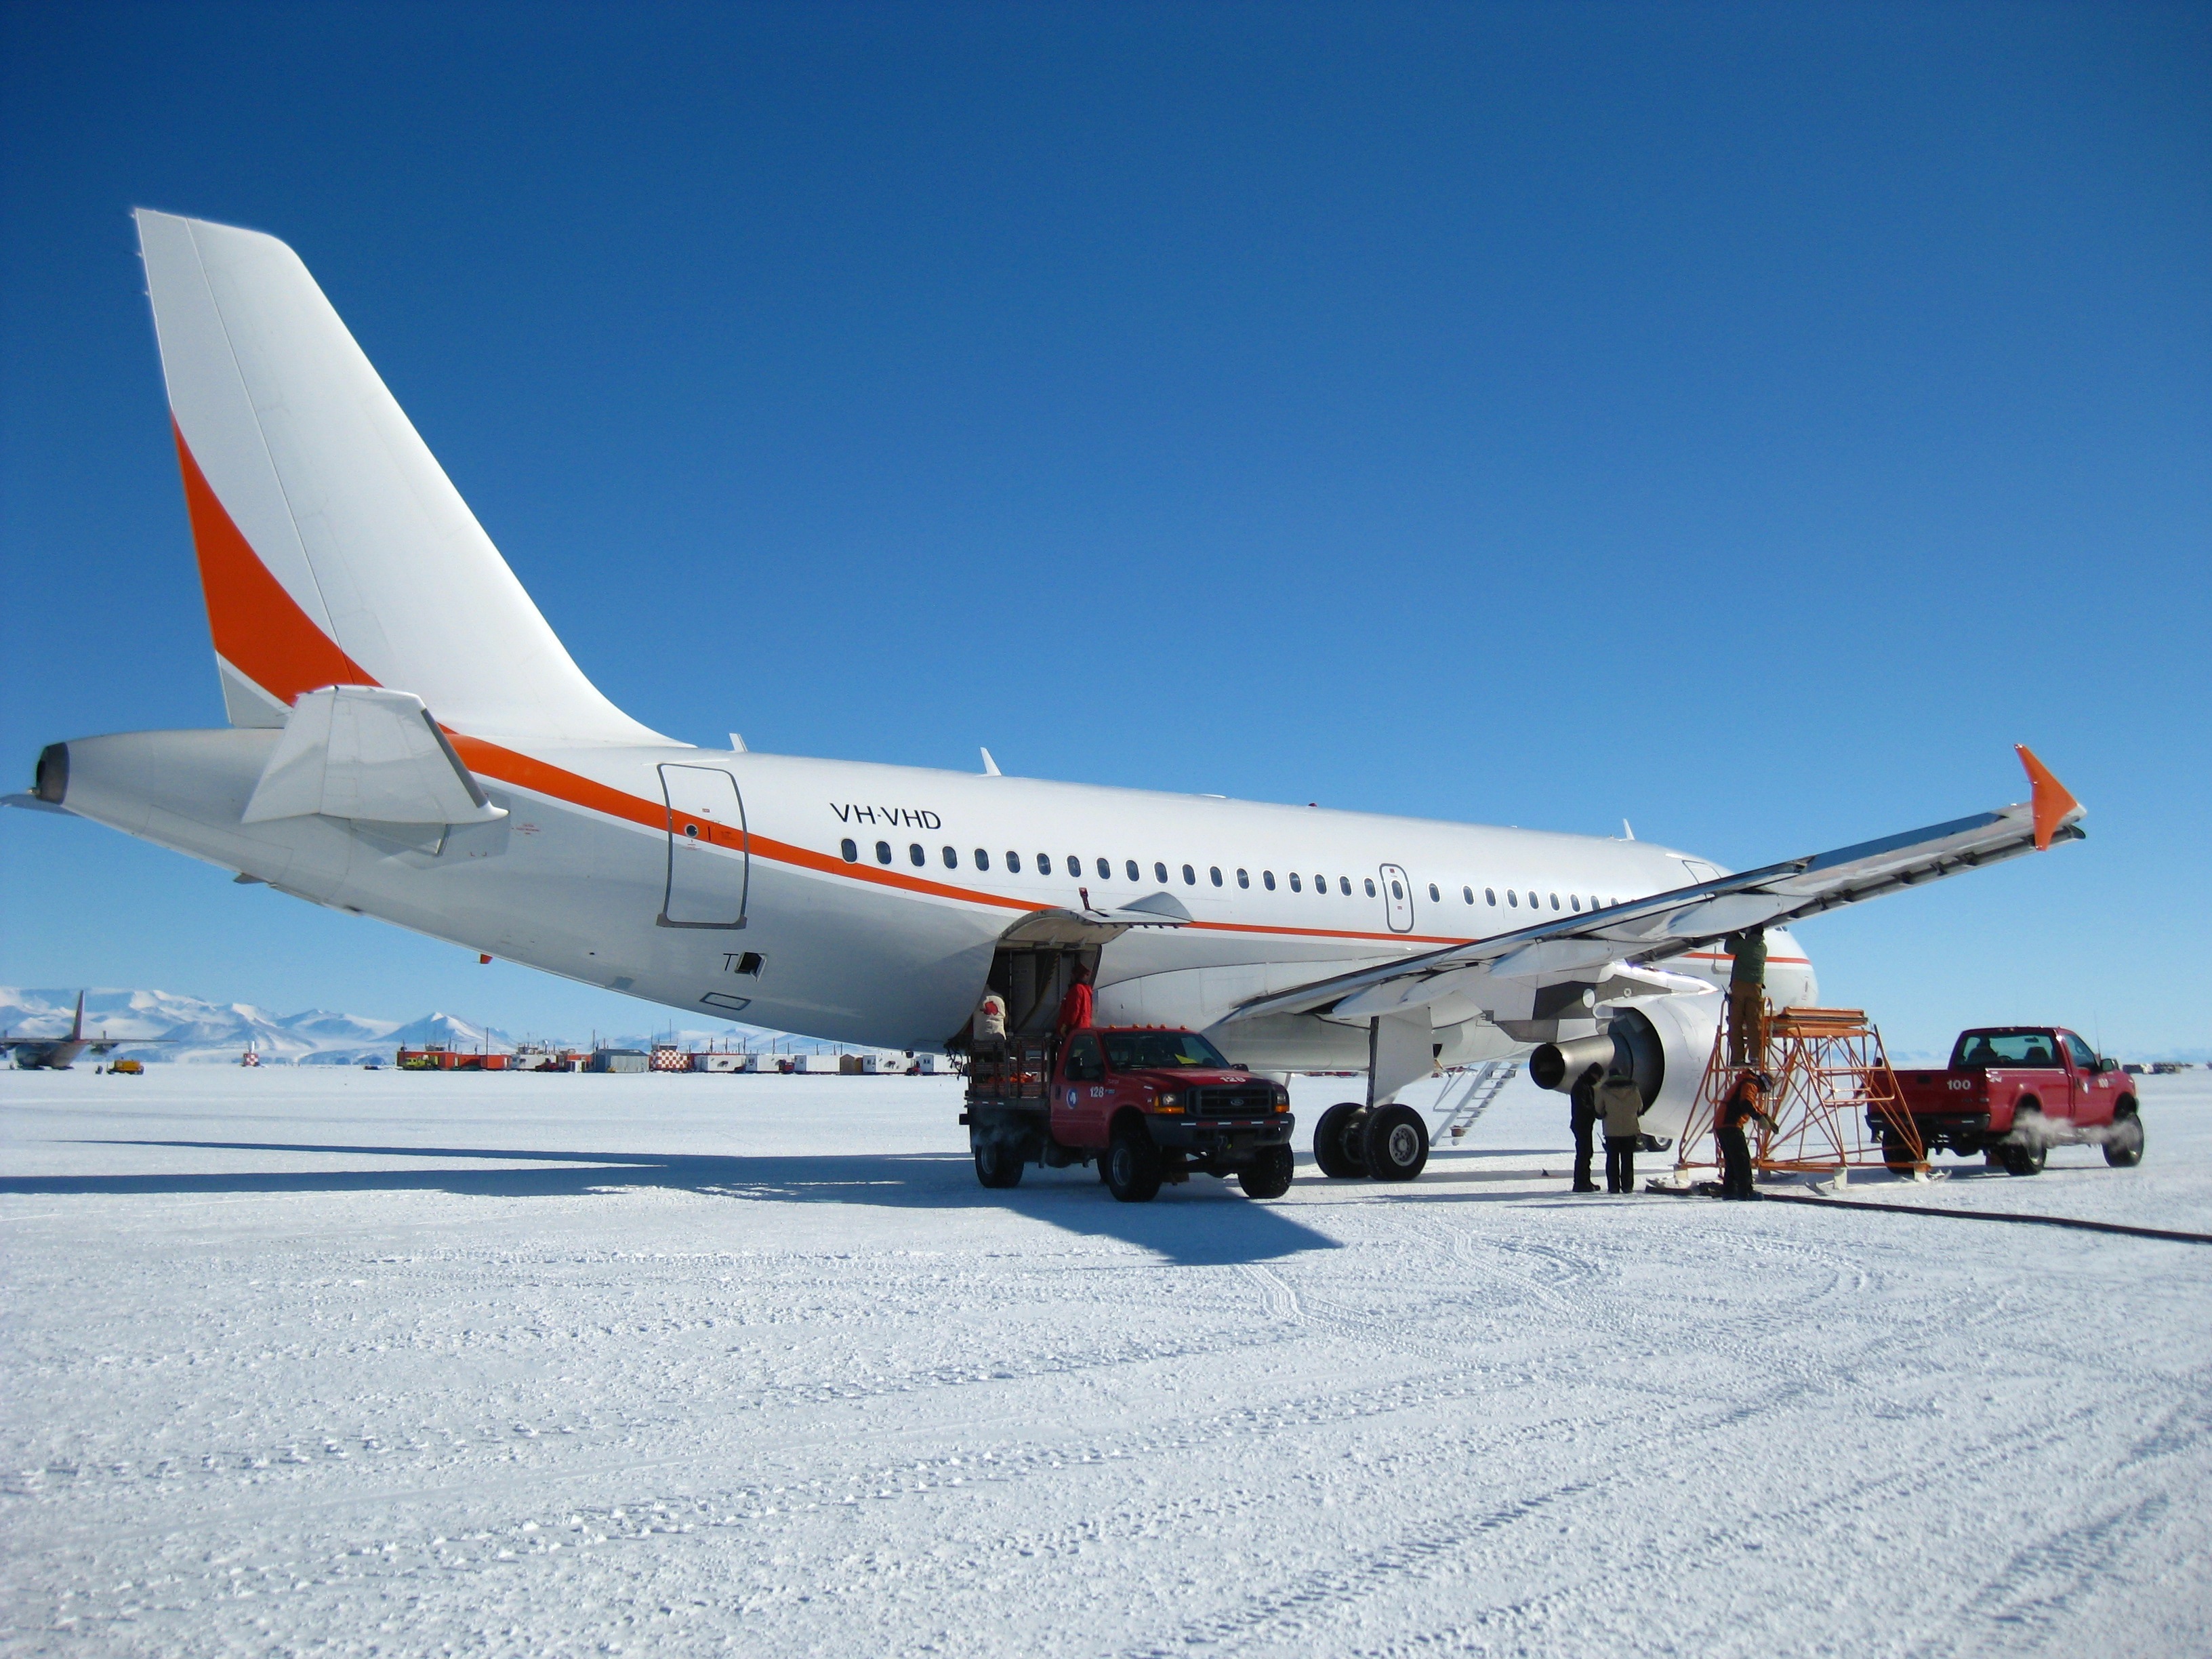 Plane sits on ice runway.